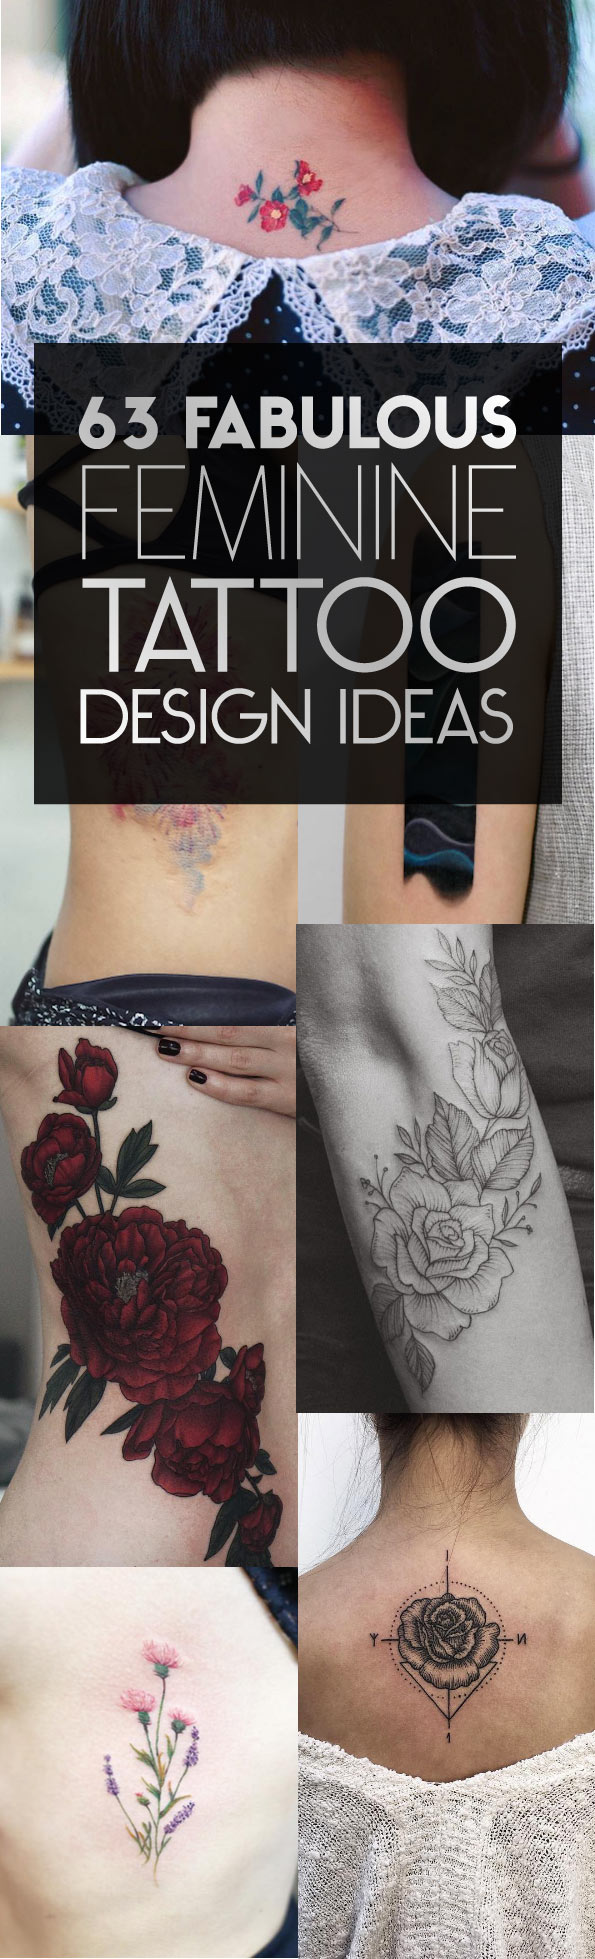 63 Fabulous Feminine Tattoo Design Ideas | TattooBlend